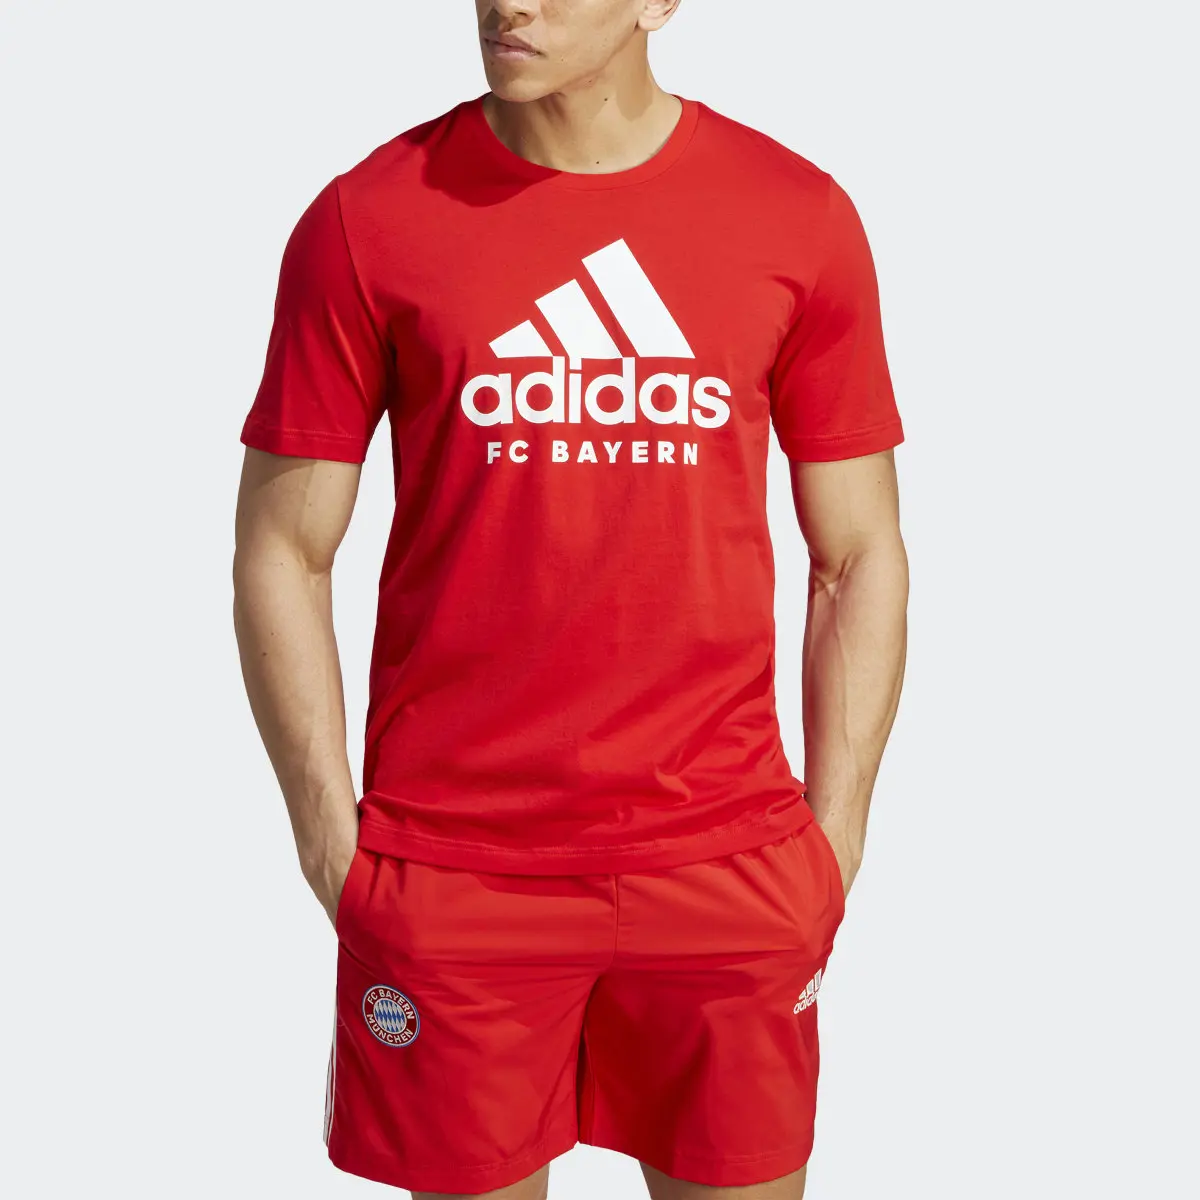 Adidas FC Bayern DNA Graphic T-Shirt. 1